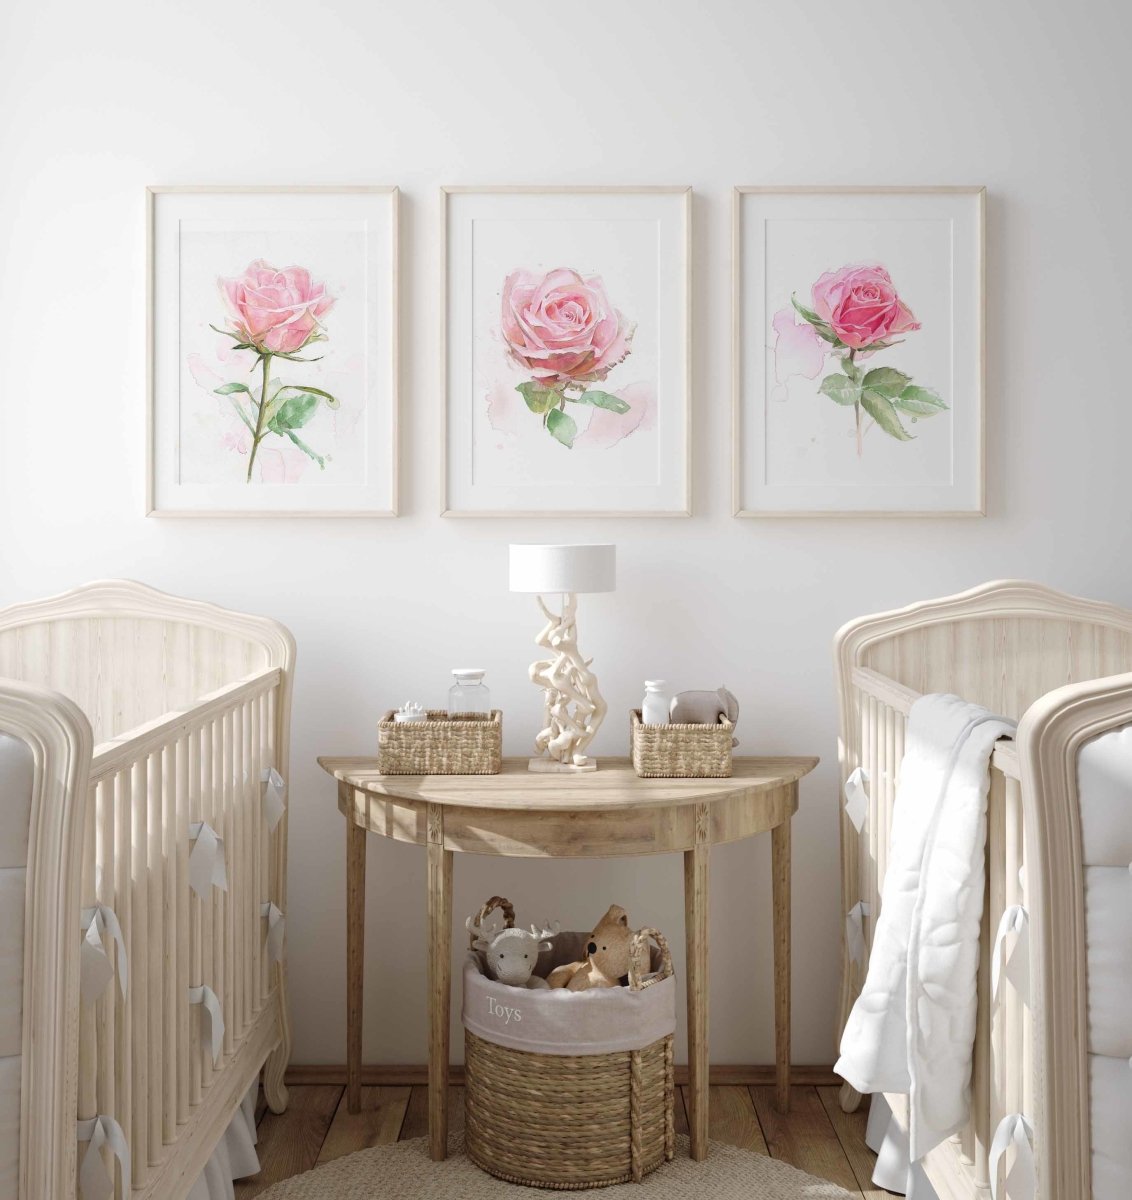 set of three pink rose prints in a baby's nursery